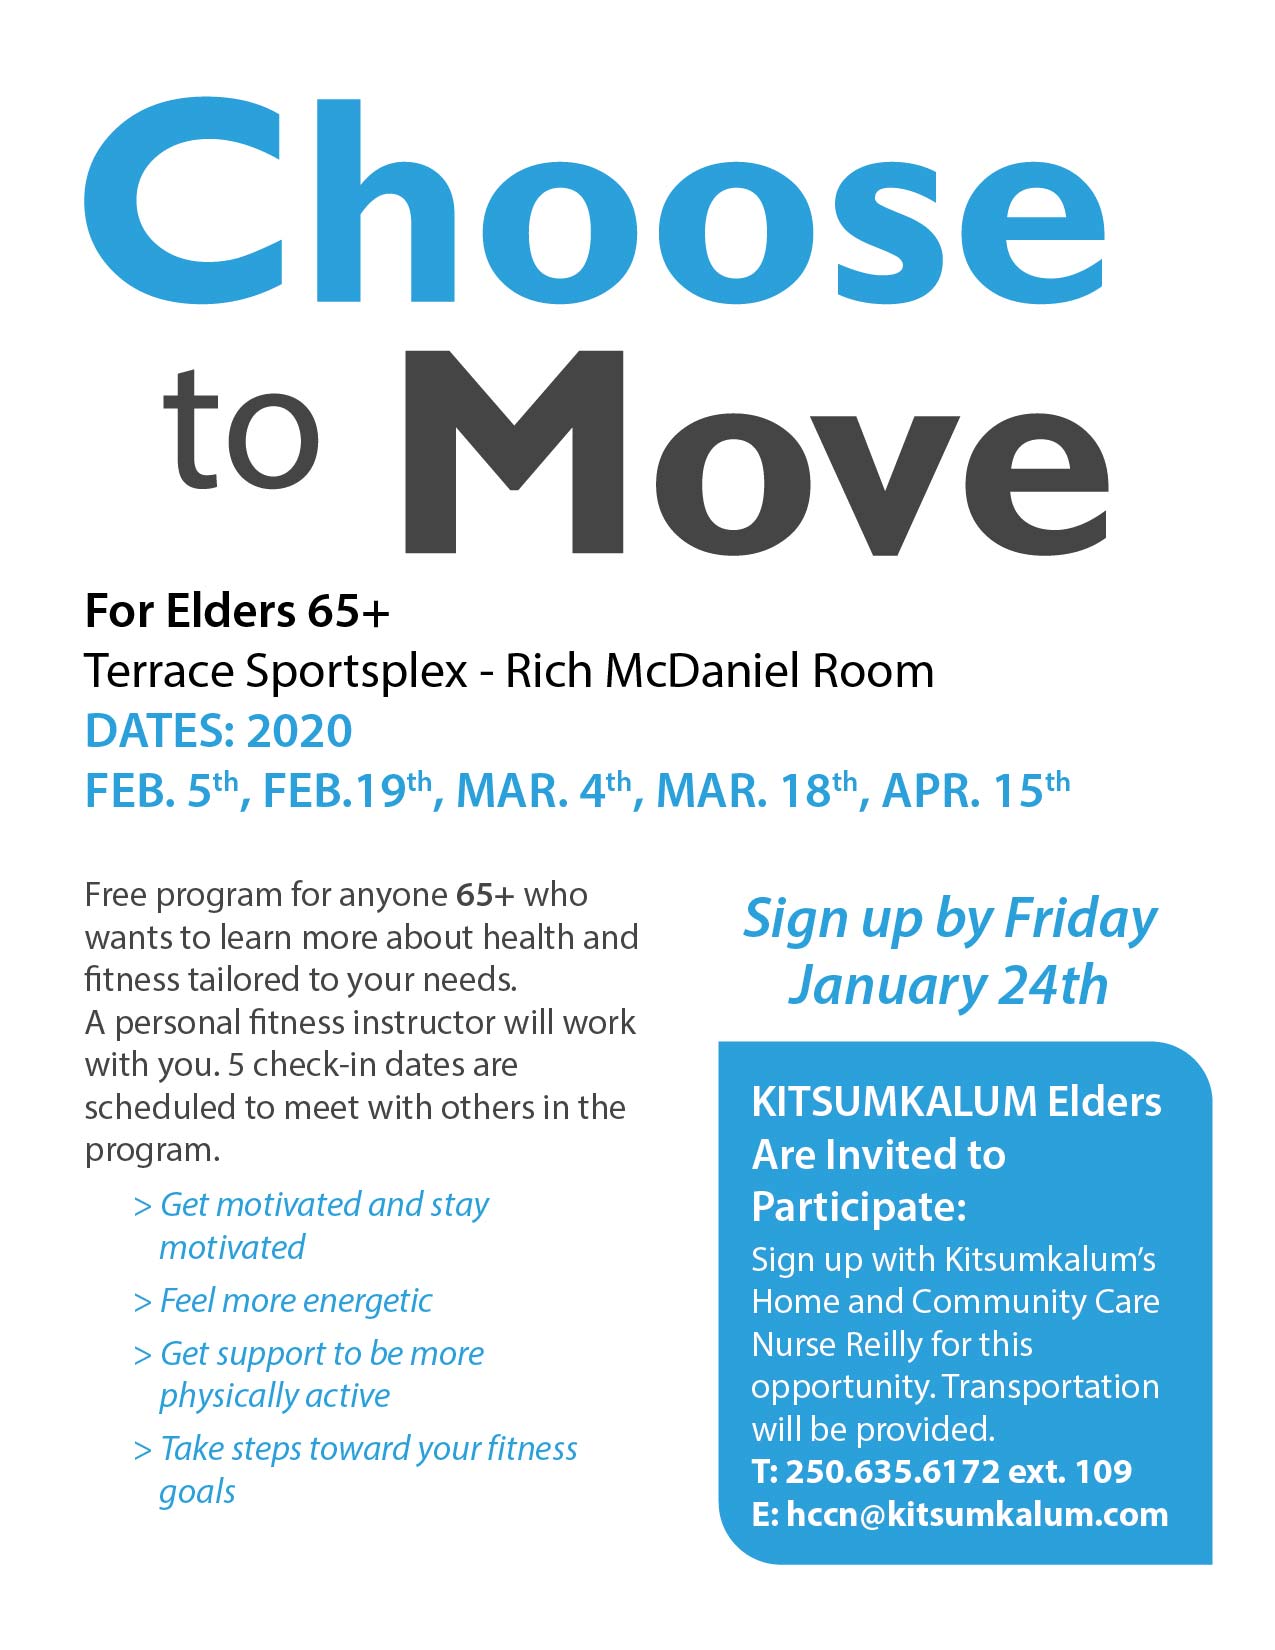 Choose to Move Fitness Program for Elders